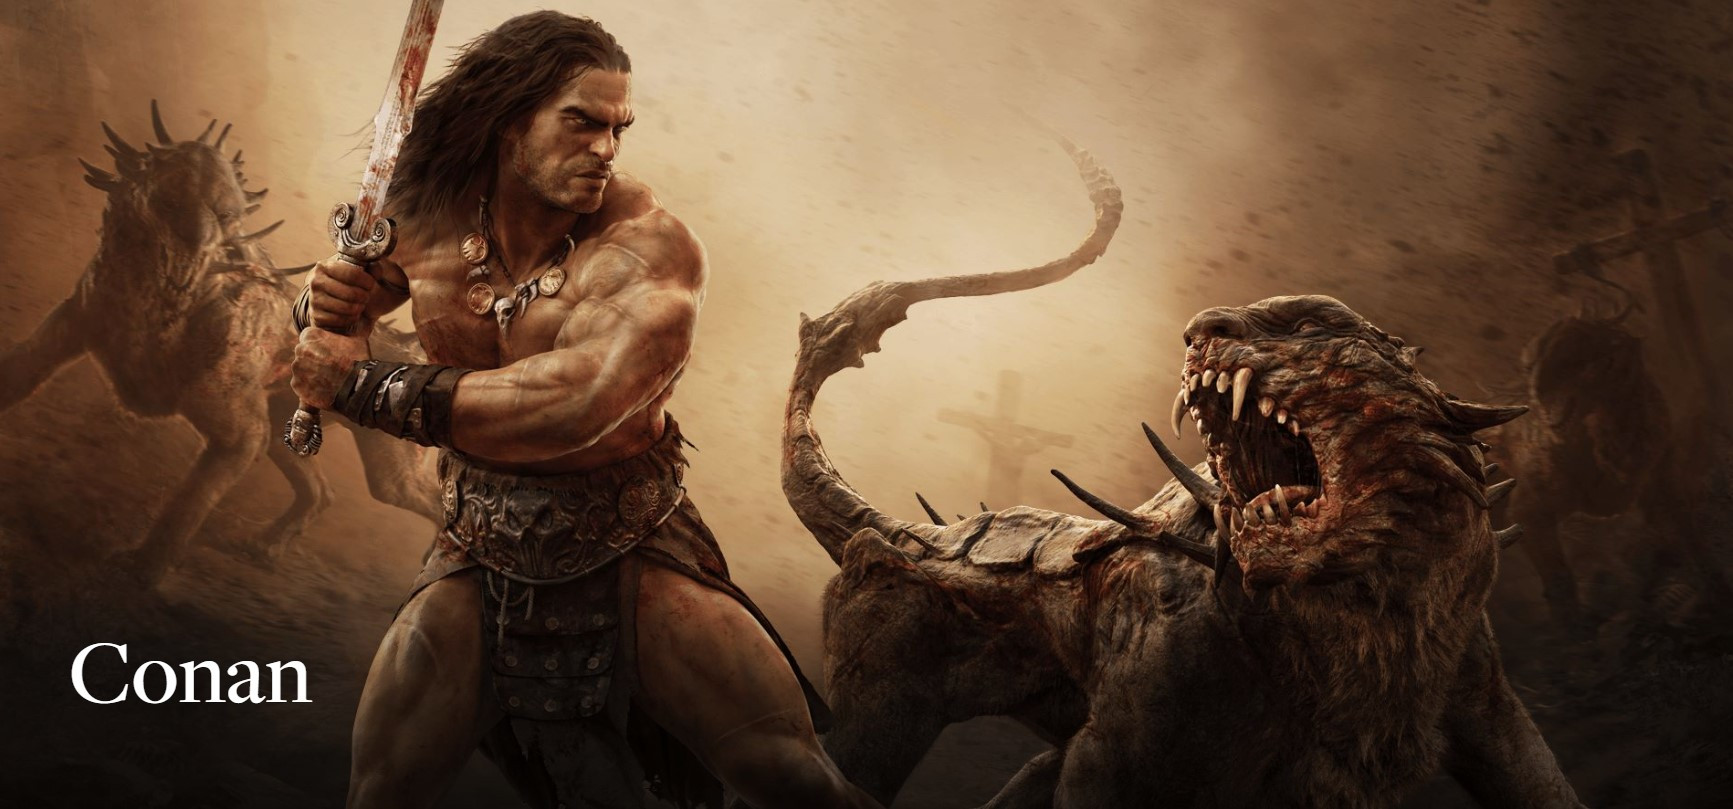 Conan the Barbarian Series In Development At Netflix